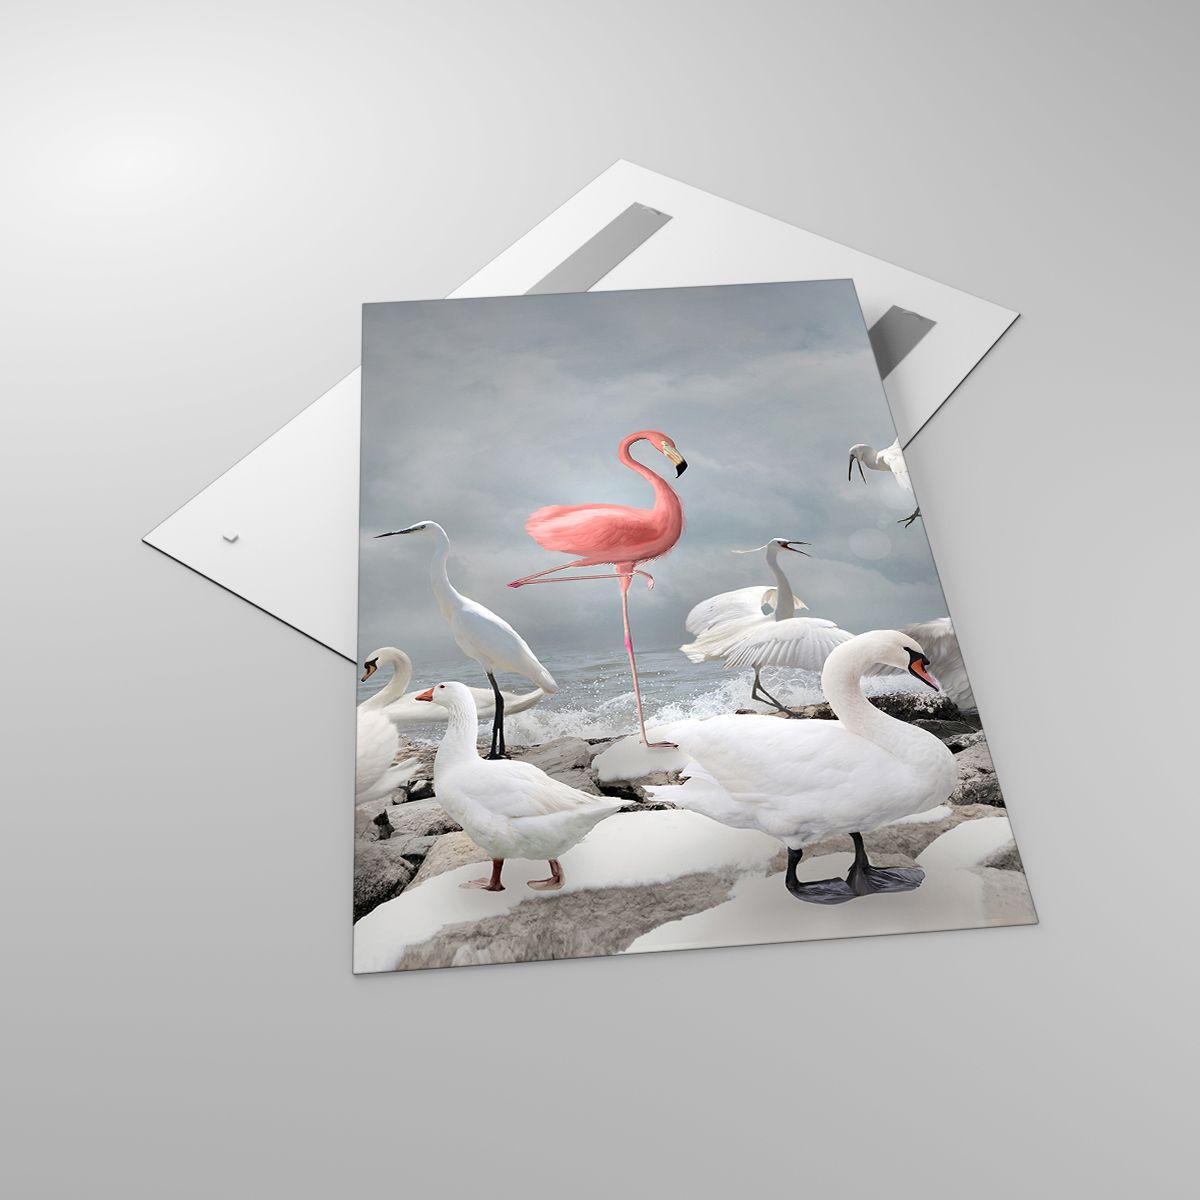 Glasbild Flamingo, Glasbild Schwan, Glasbild Die Vögel, Glasbild Tiere, Glasbild Natur